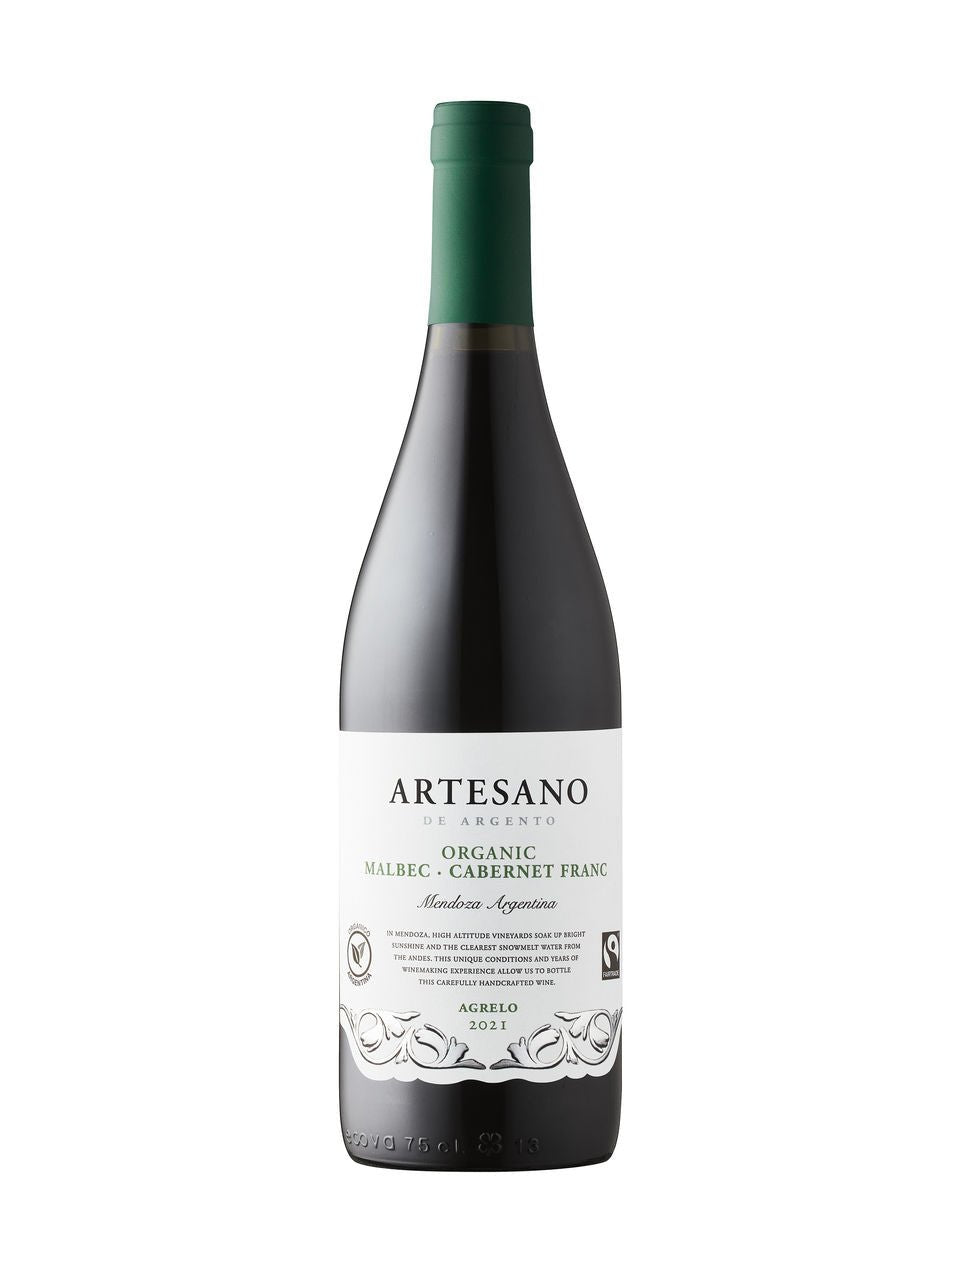 Artesano de Argento Organic Malbec/Cabernet Franc 2021 | Exquisite Wine & Alcohol Gift Delivery Toronto Canada | Vyno